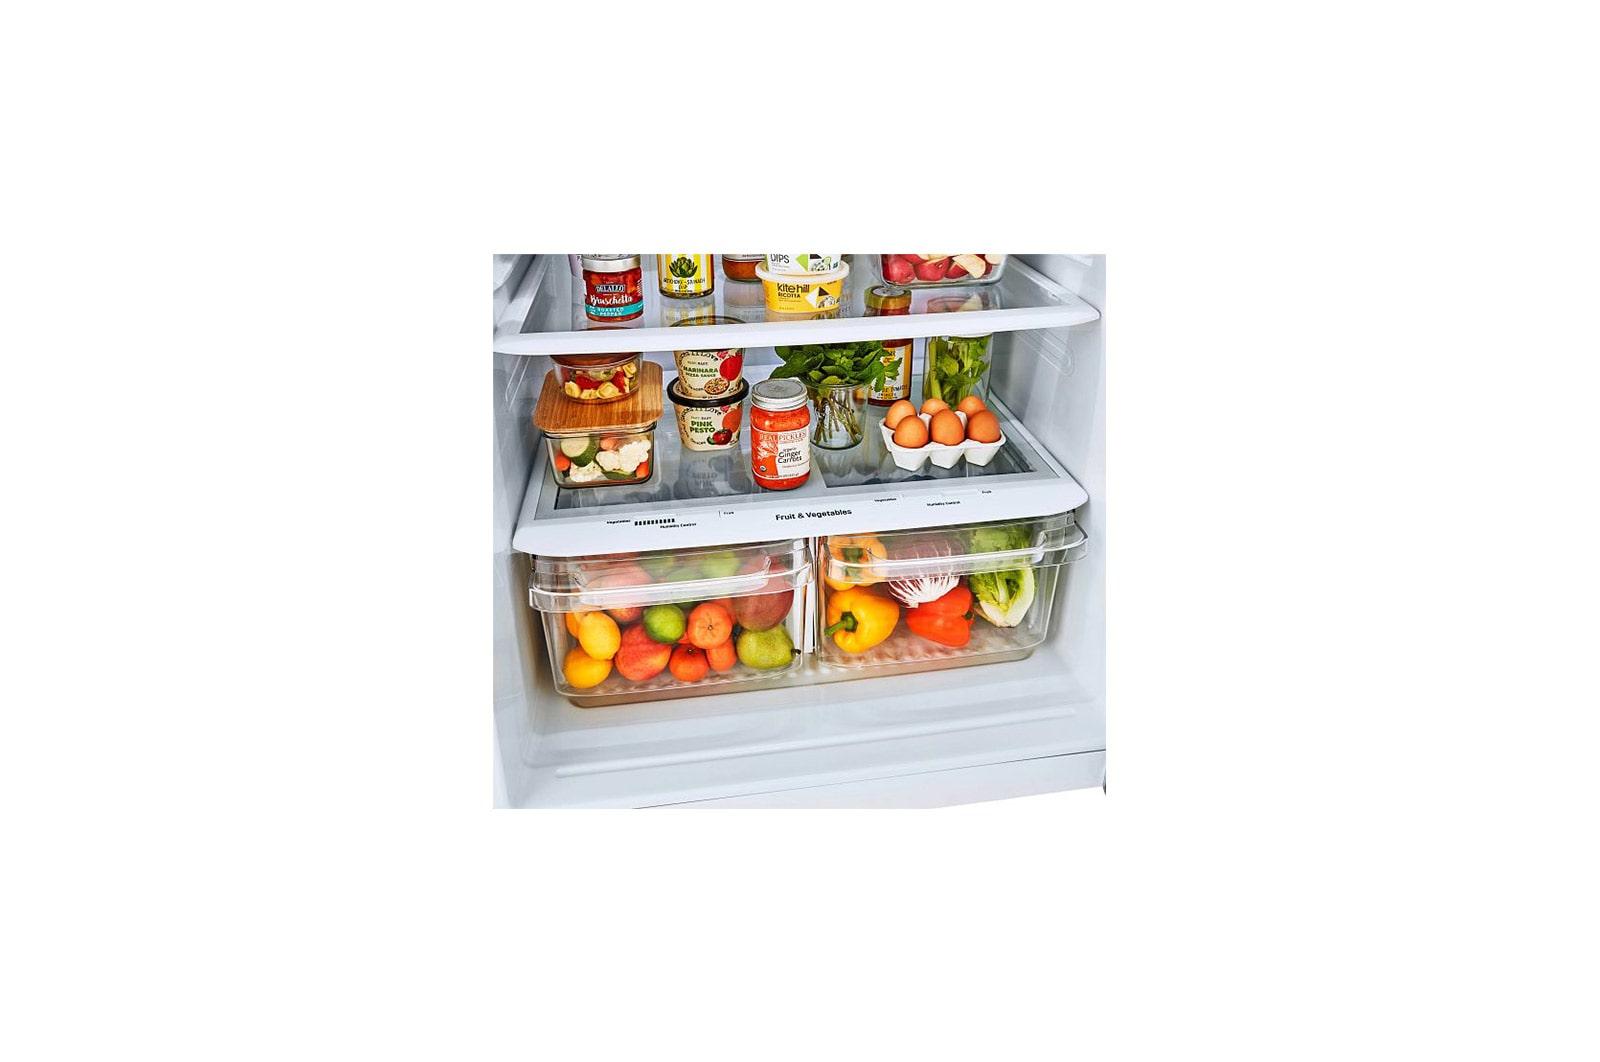 Lg 24 cu. ft. Top Freezer Refrigerator